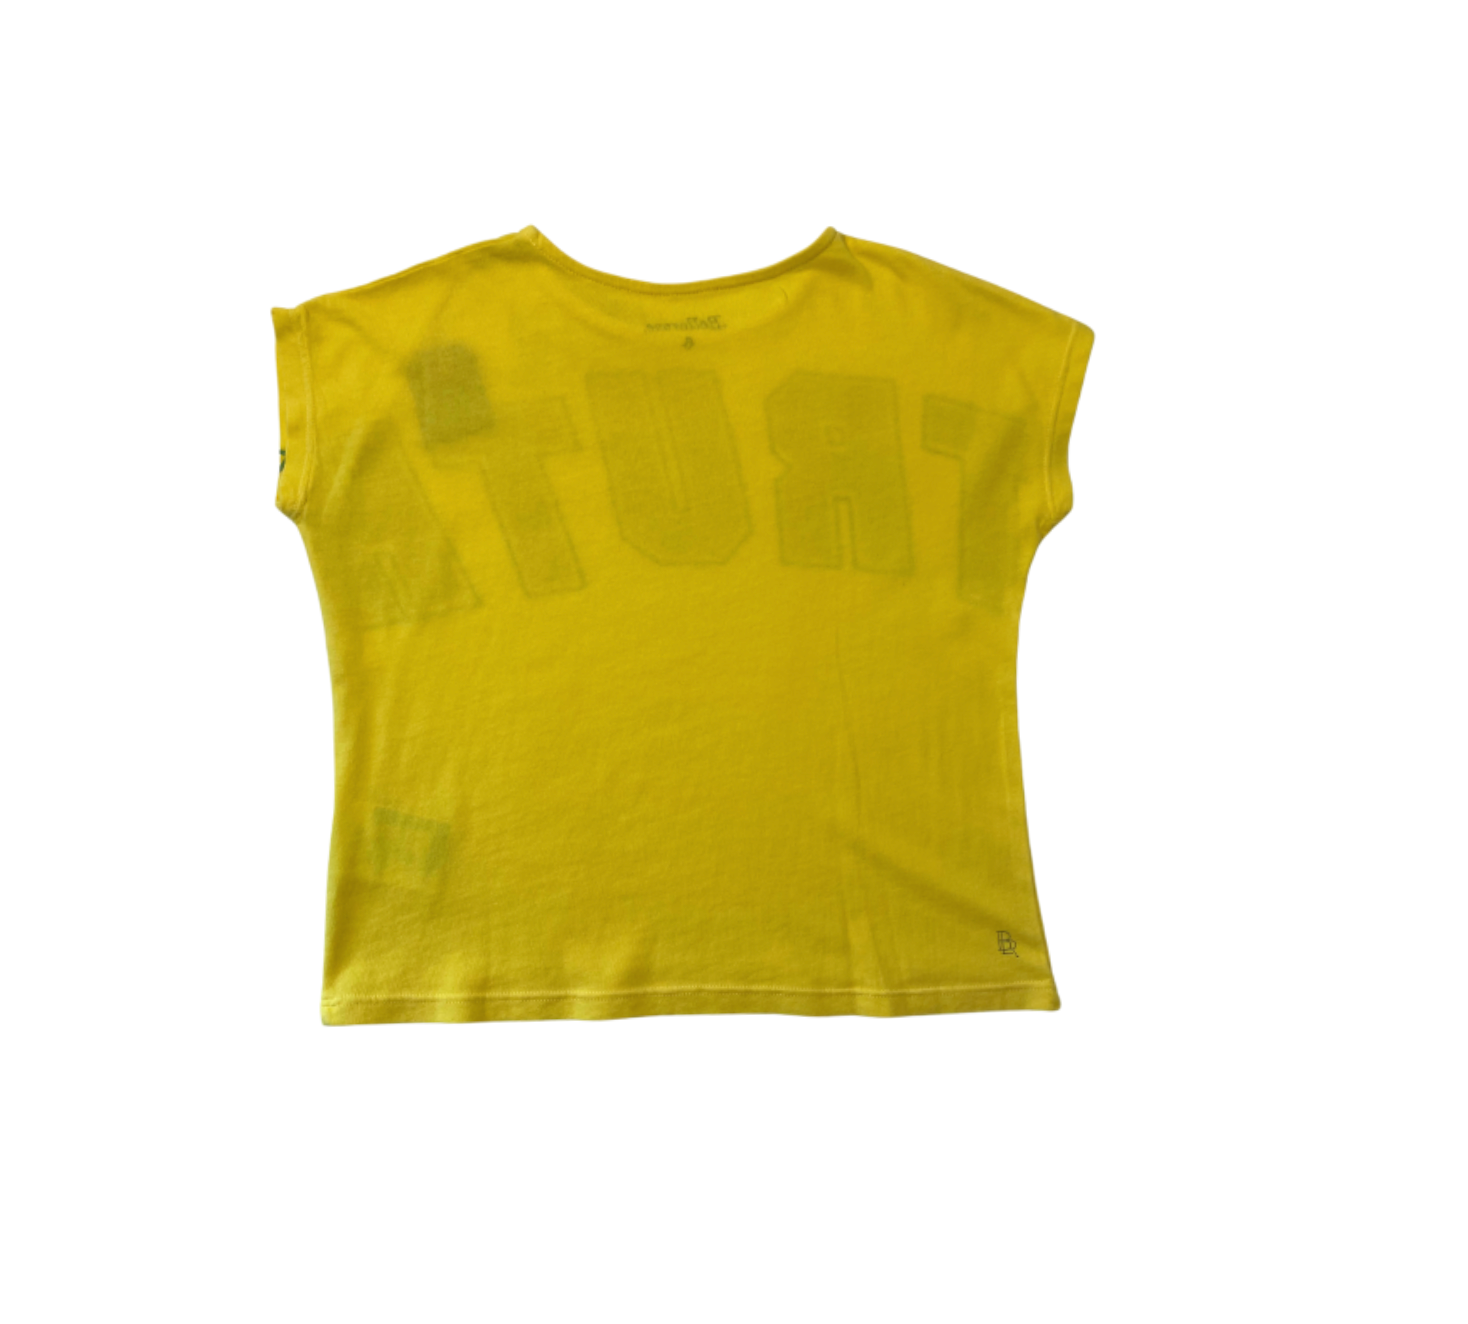 BELLEROSE - T-shirt jaune "Truth" - 6 ans